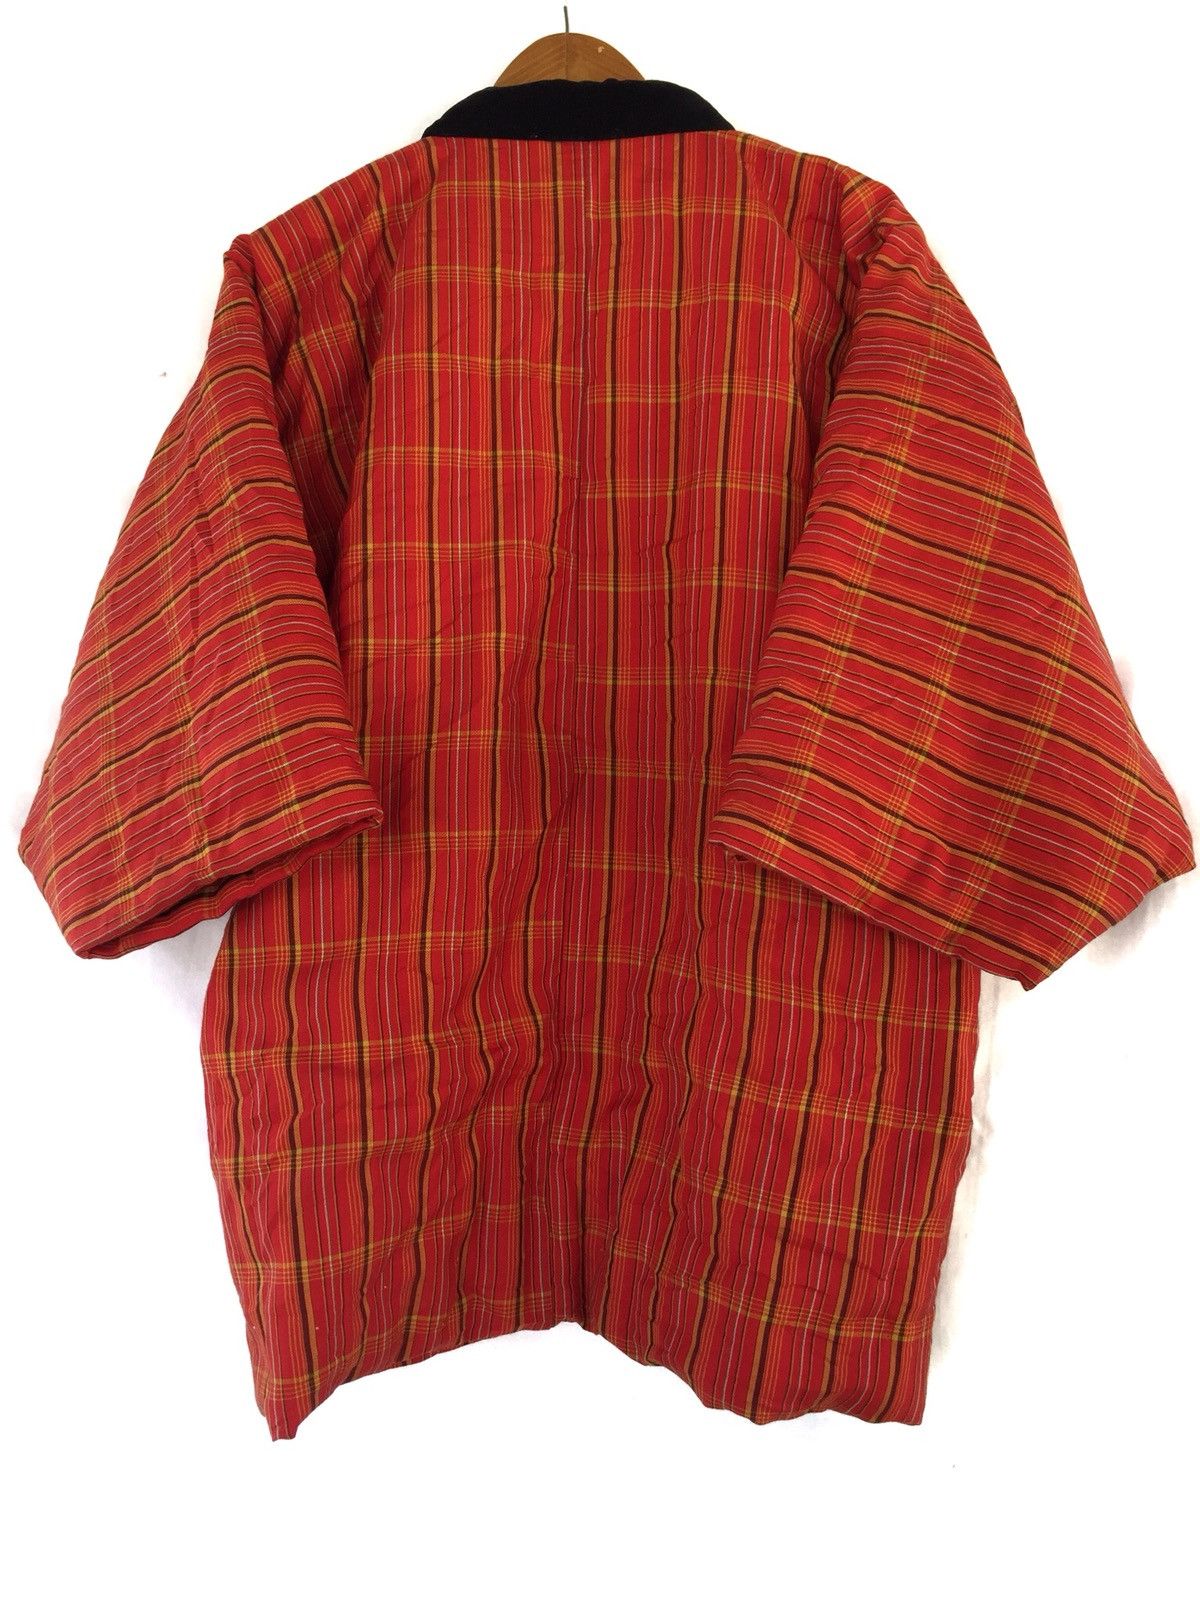 Kimono Japan Dragon KUWANO CONTEMPORARY DESIGN HANTEN KIMONO Size US L / EU 52-54 / 3 - 2 Preview